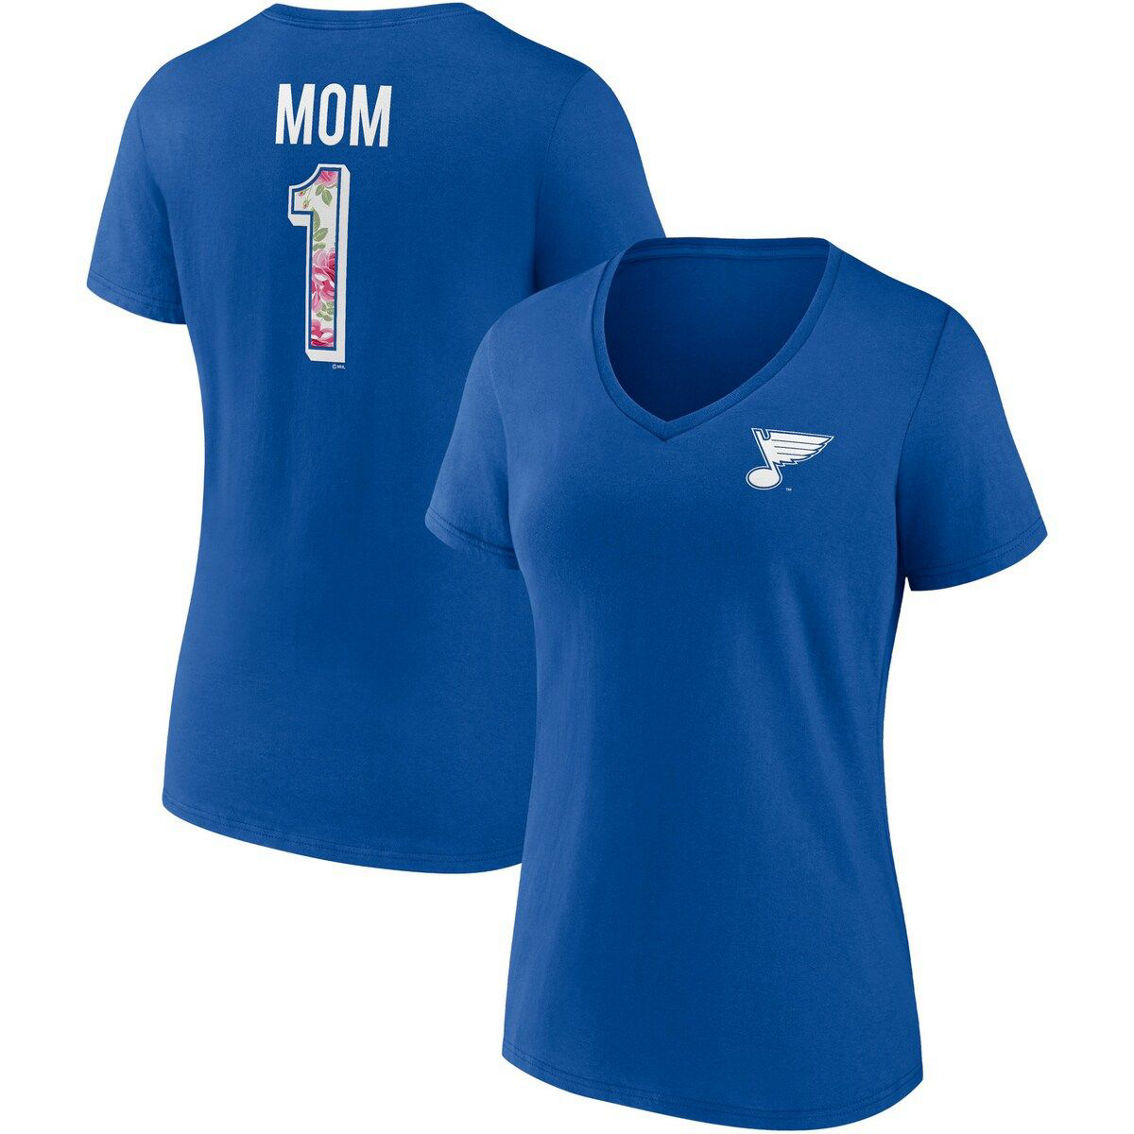 Fanatics Branded Women's Blue St. Louis Blues Team Mother's Day V